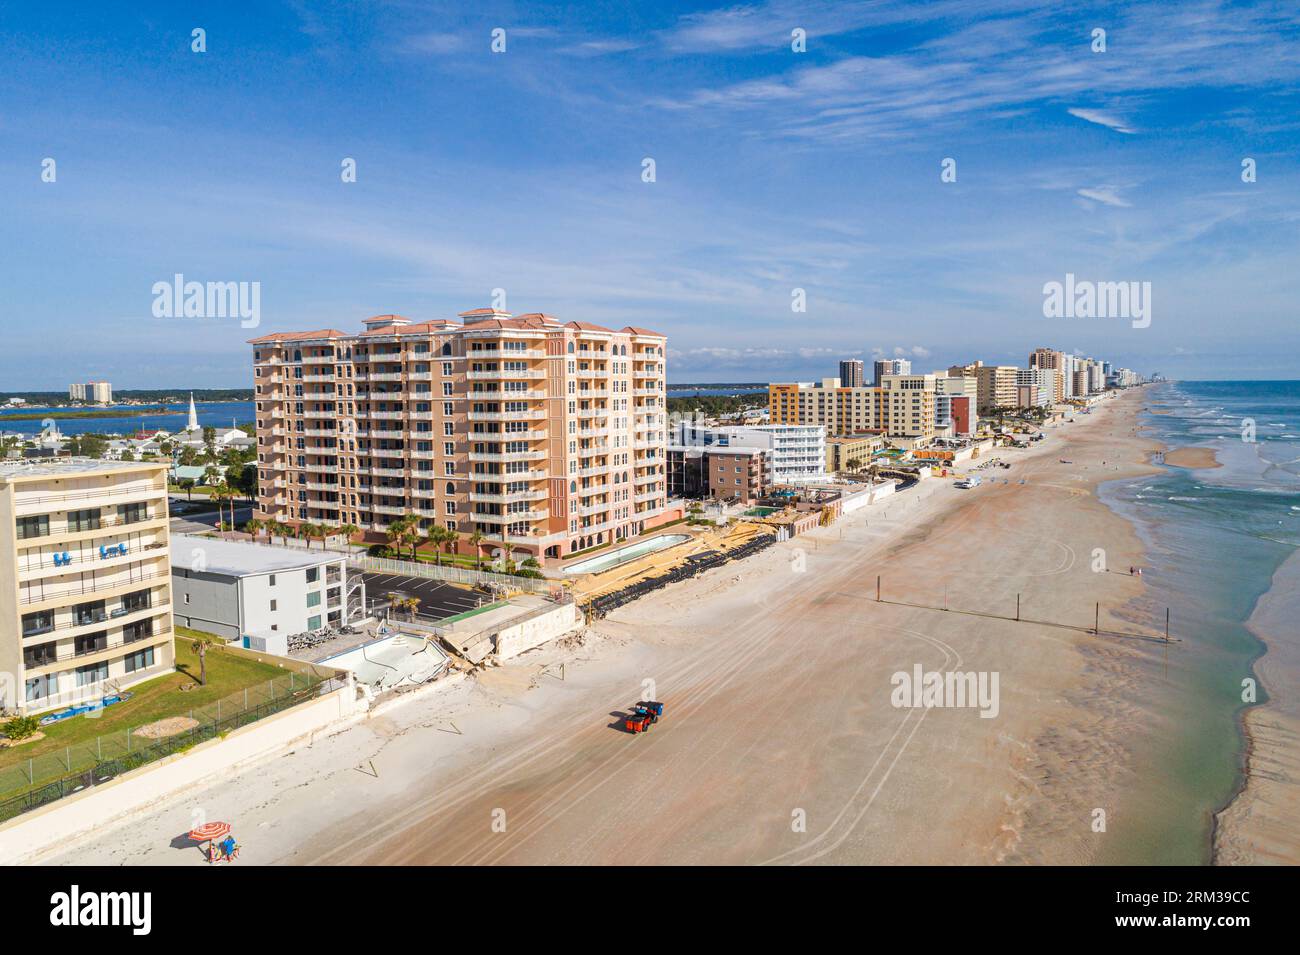 Daytona Beach Shores Florida,Atlantic Ocean,aerial overhead from above view,oceanfront condominium hotels,Hurricane Ian Nicole cleanup,swimming pool d Stock Photo